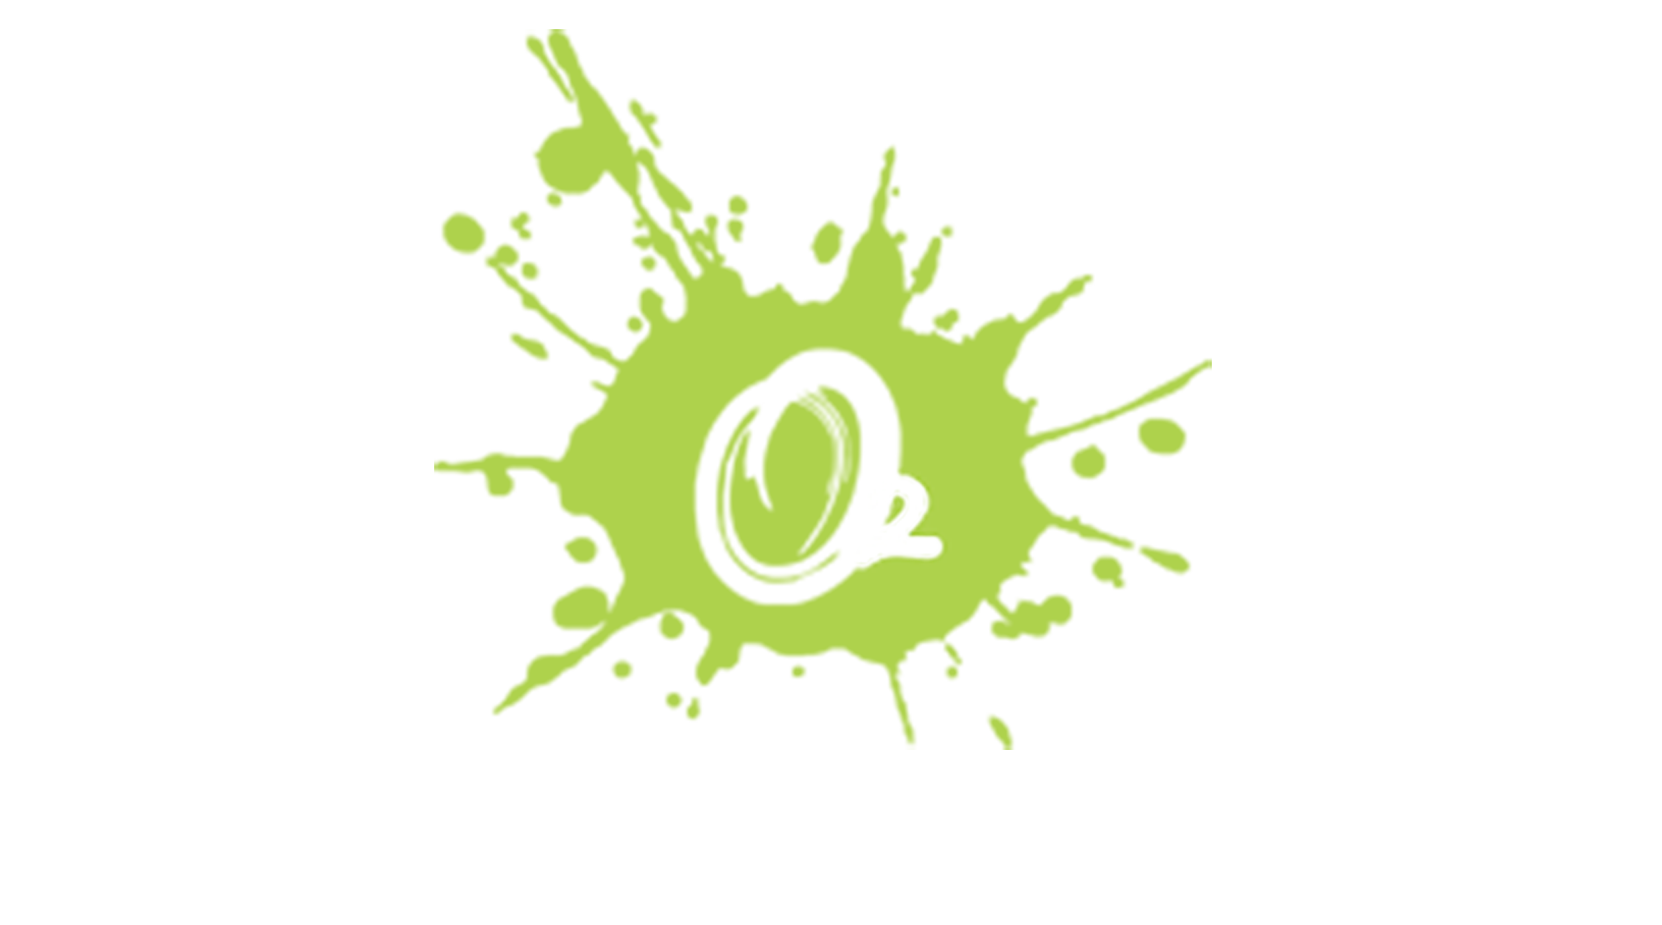 02 Academy Lagos